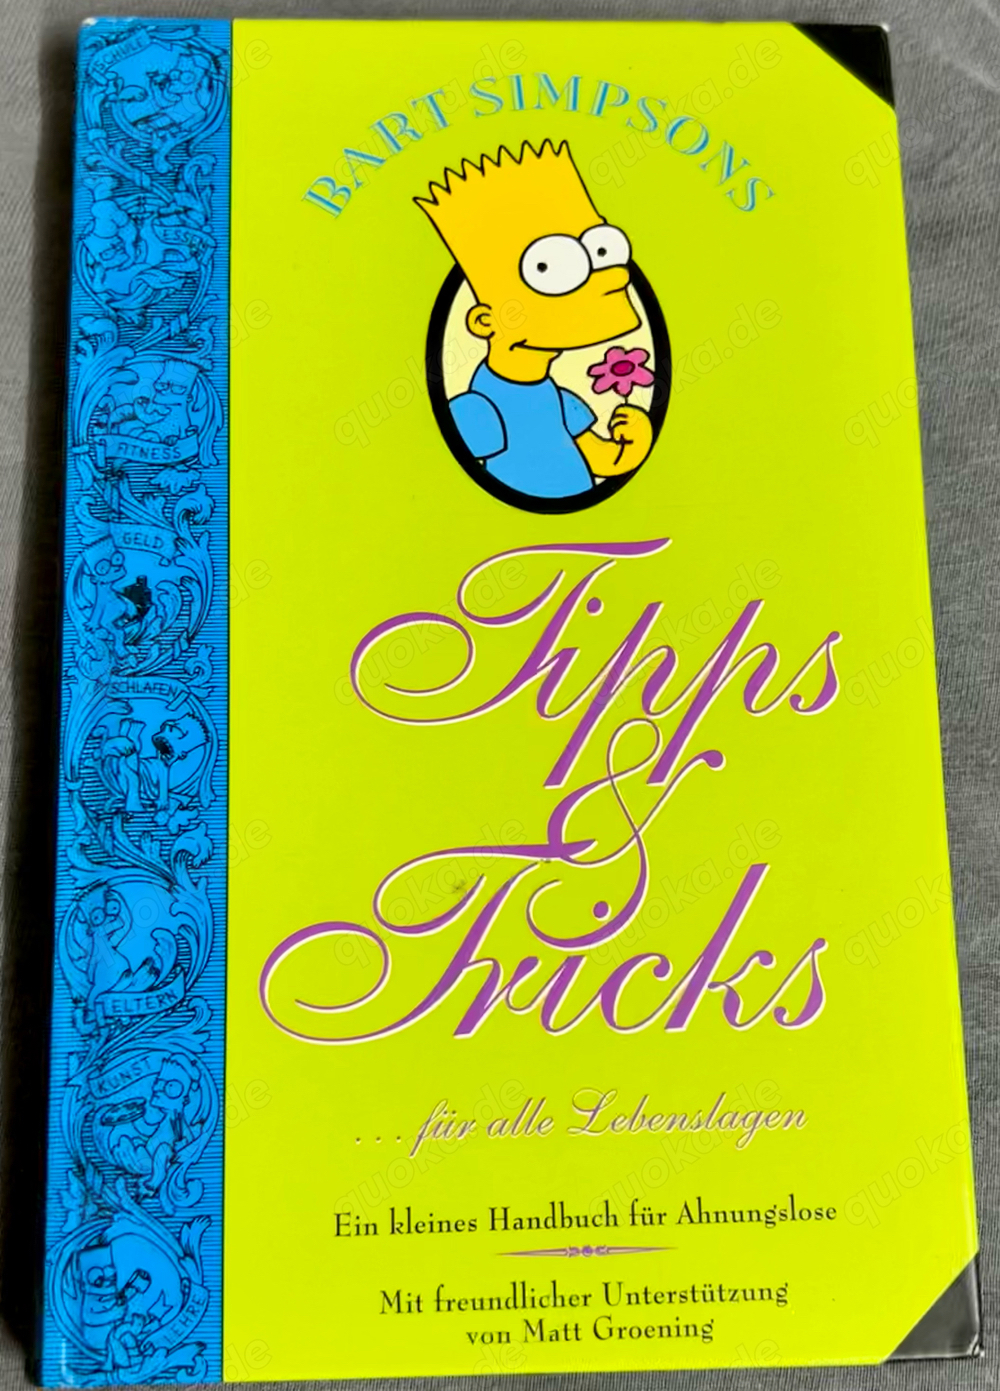 Bart Simpson Tipps & Tricks in allen Lebenslagen